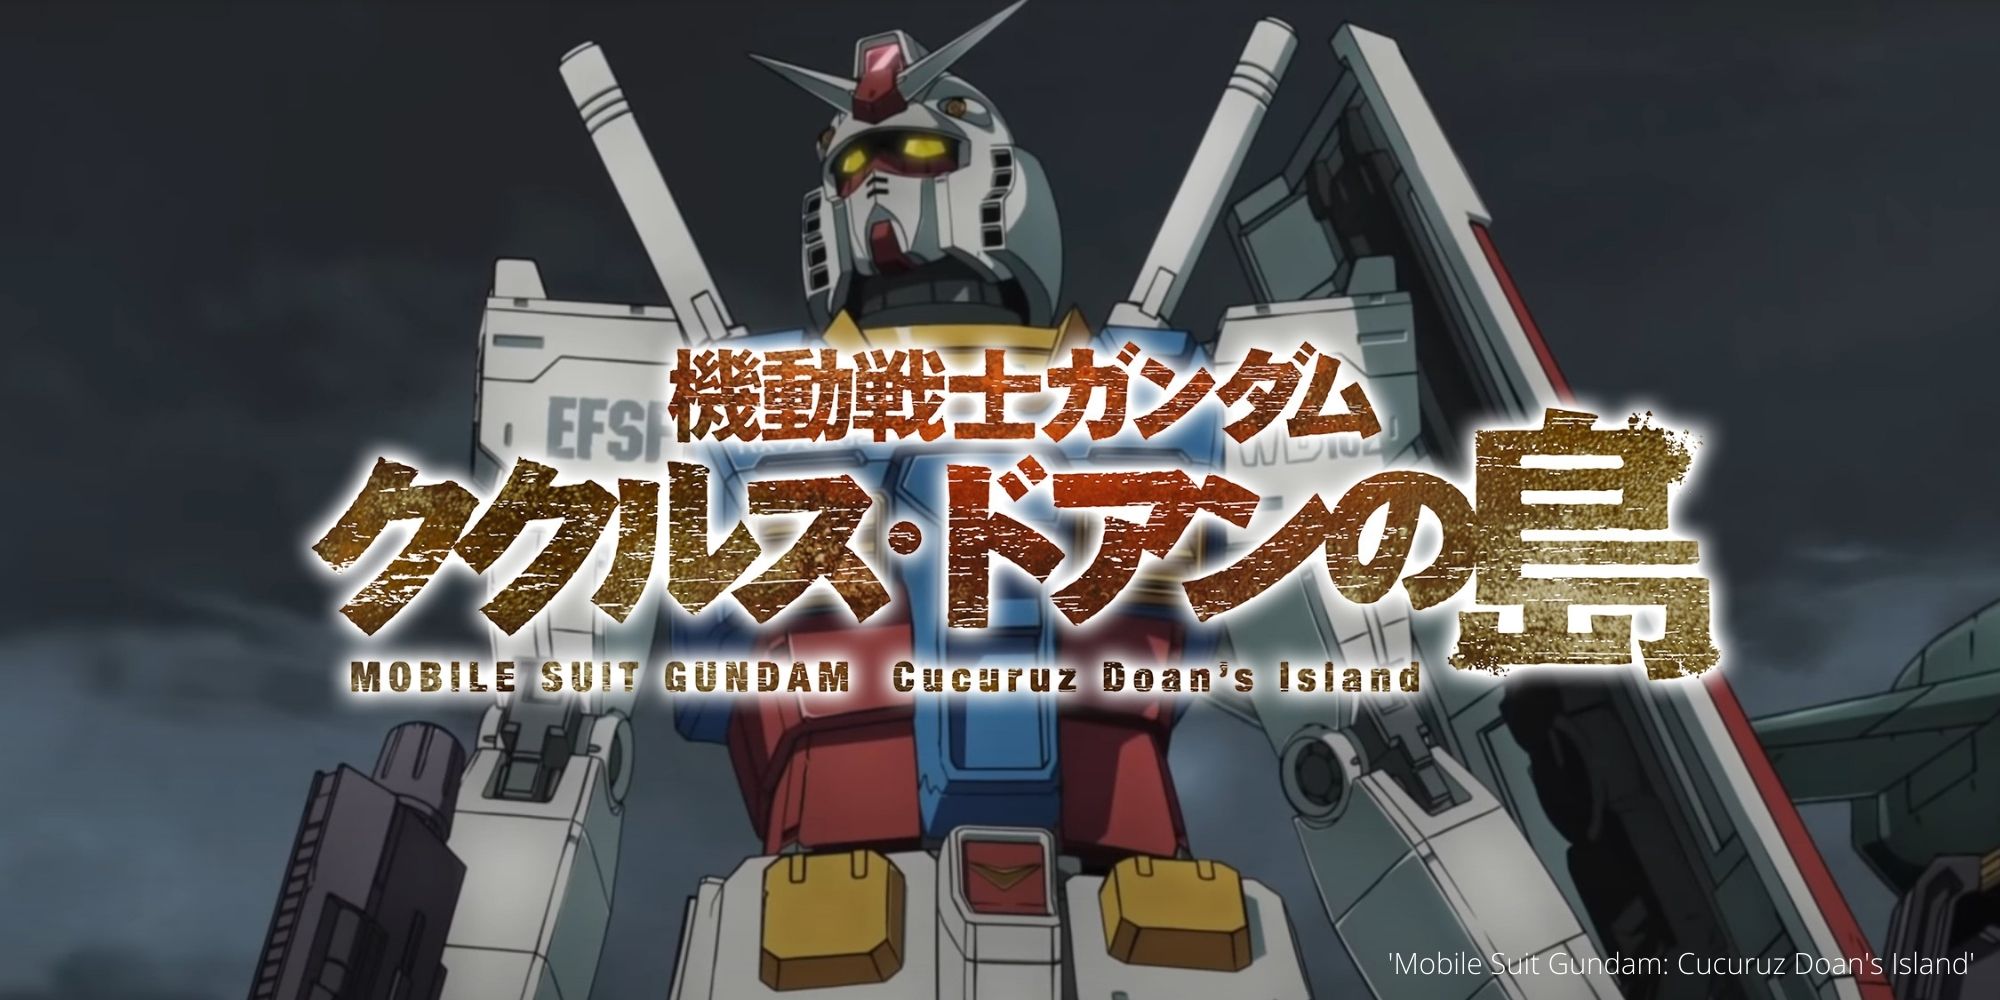 'Mobile Suit Gundam Cucuruz Doan's Island'